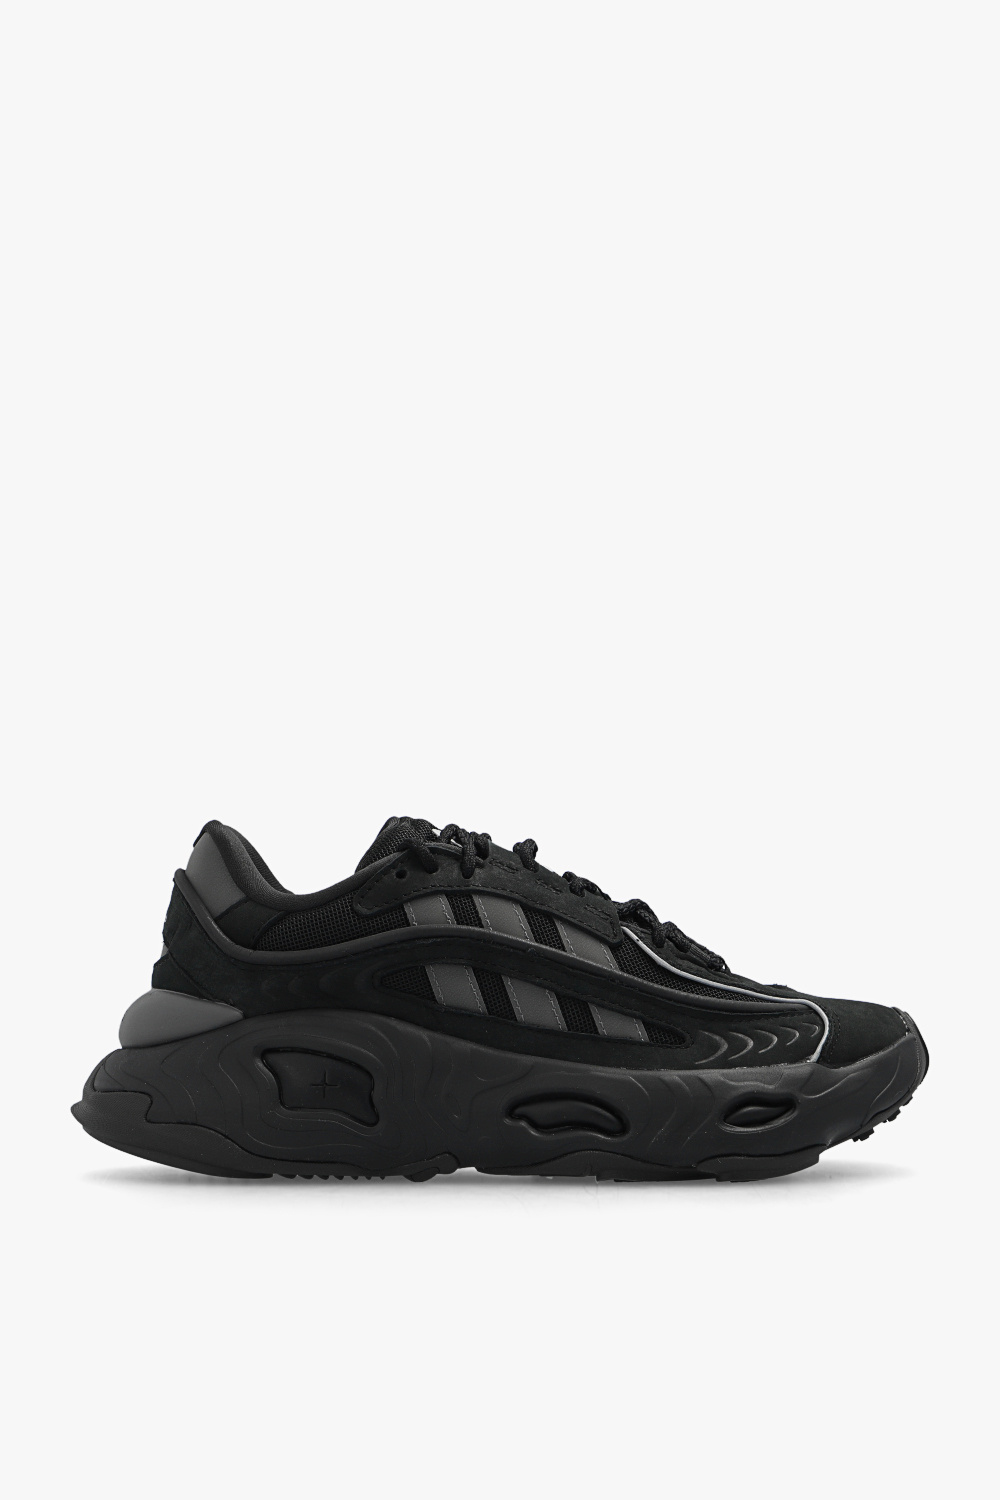 adidas b27799 shoes black boys | StclaircomoShops | Women's Shoes gear ADIDAS Originals 'Oznova W' sneakers